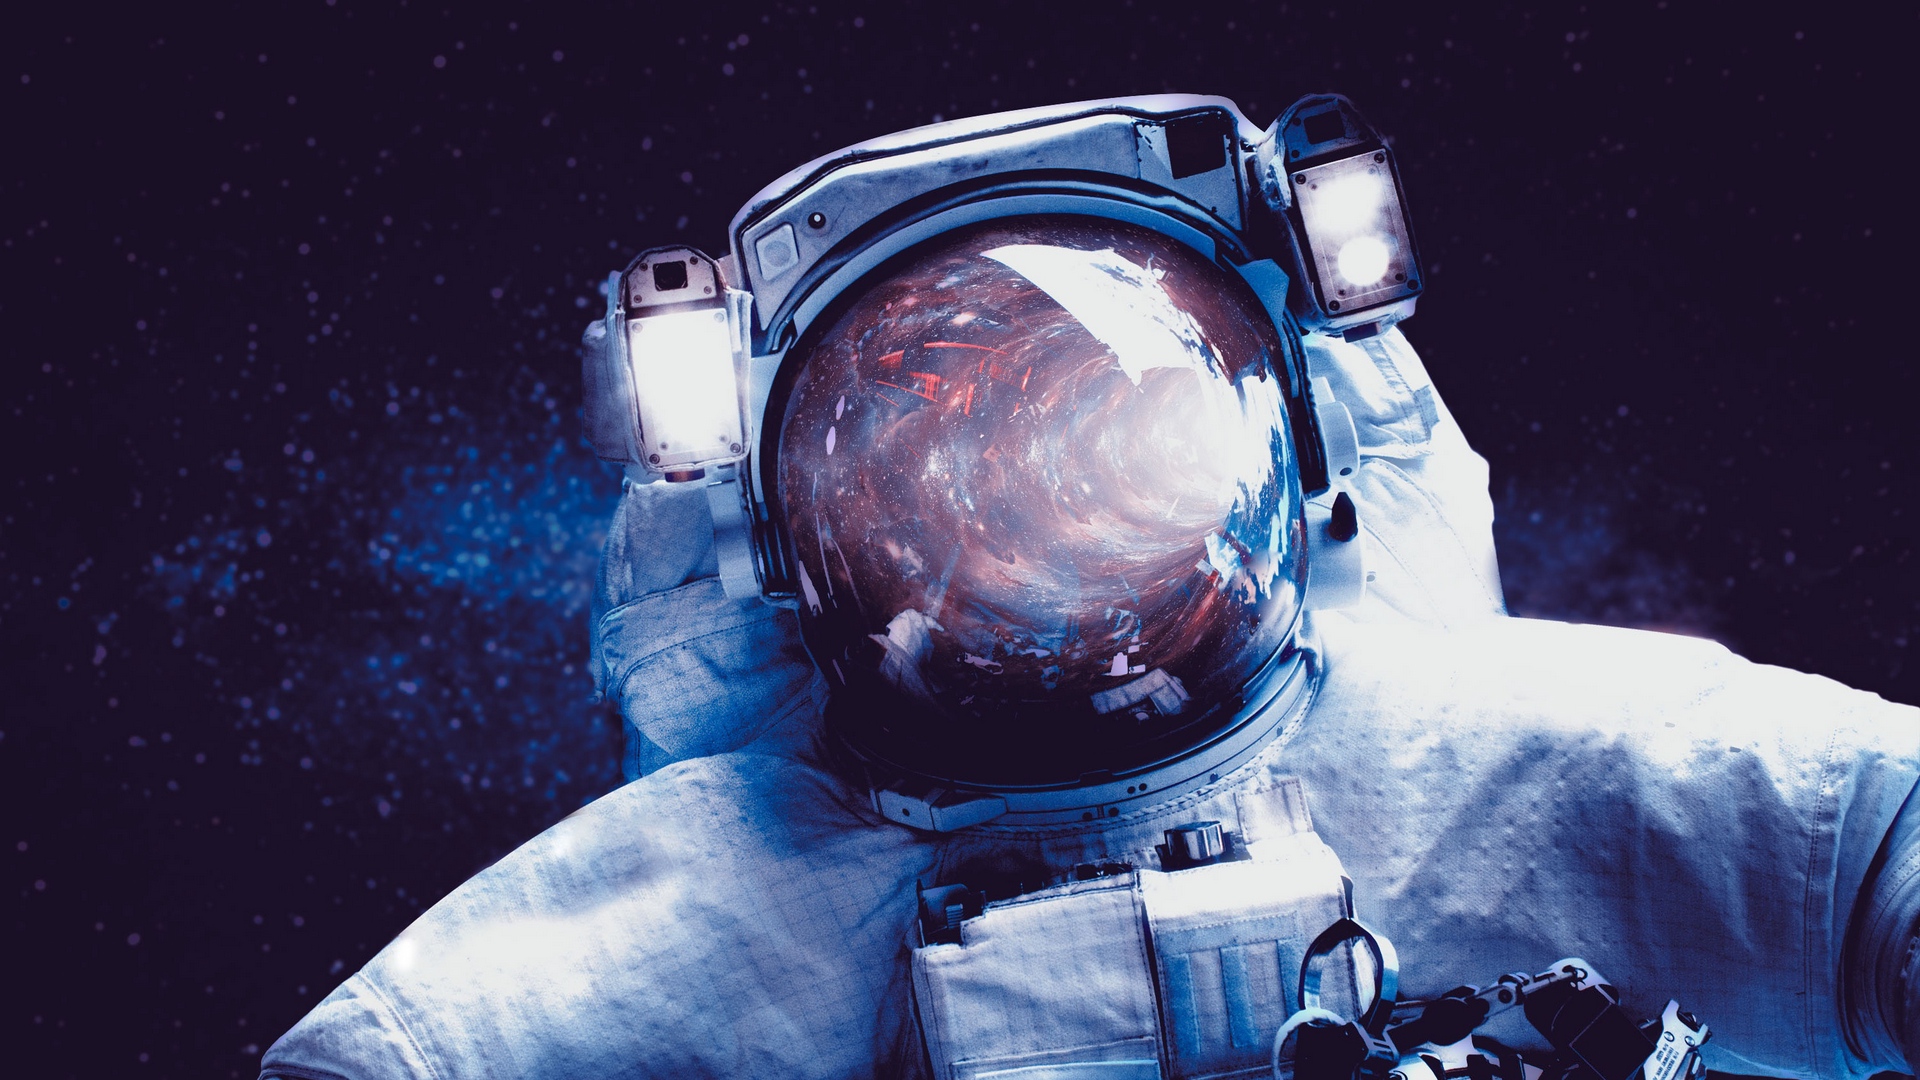 Wallpaper Astronaut, Space Suit, Spaceman - Astronaut Wallpaper 4k - HD Wallpaper 